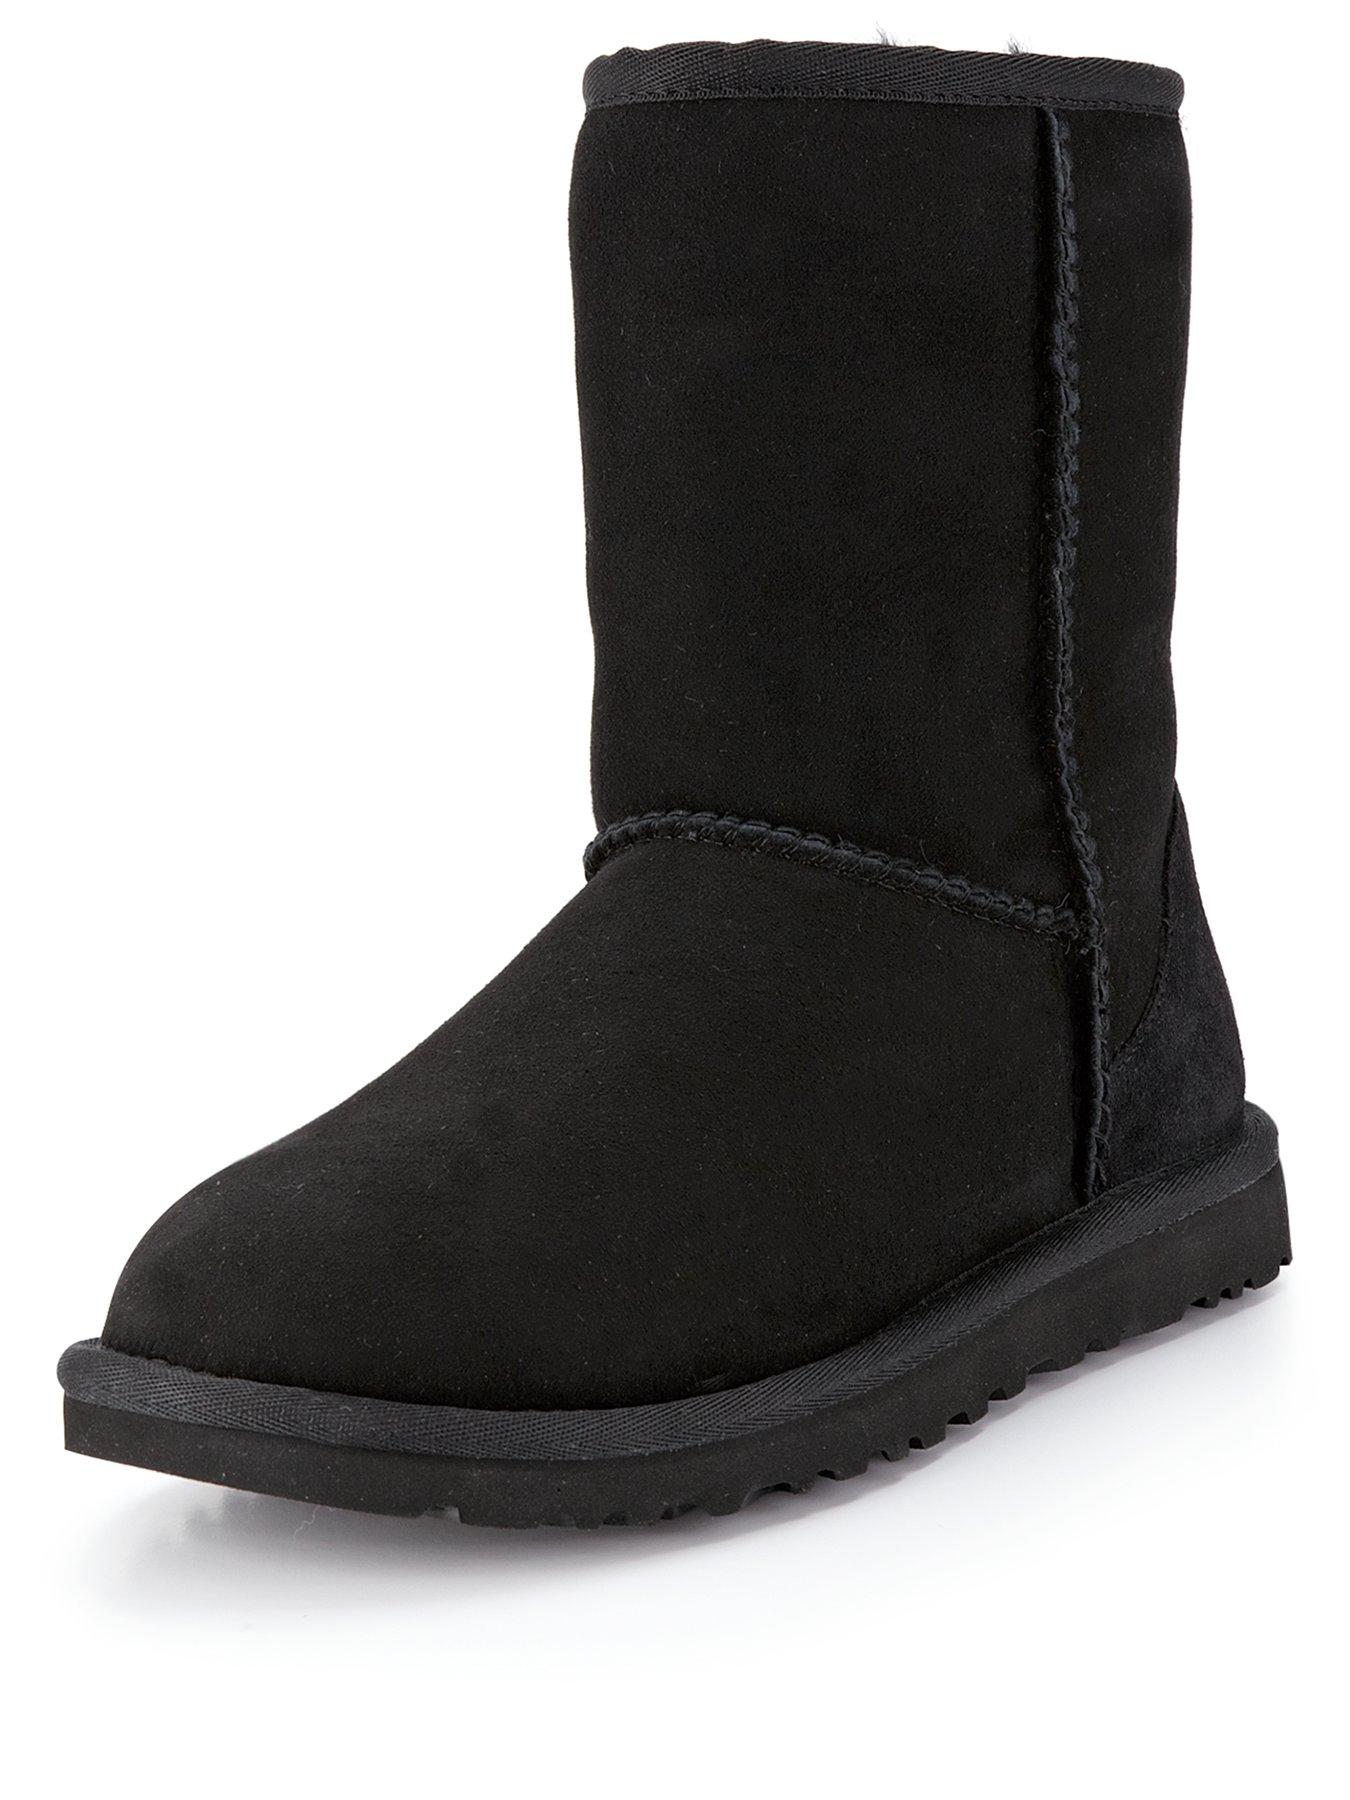 UGG Boots, Shoes \u0026 Slippers 